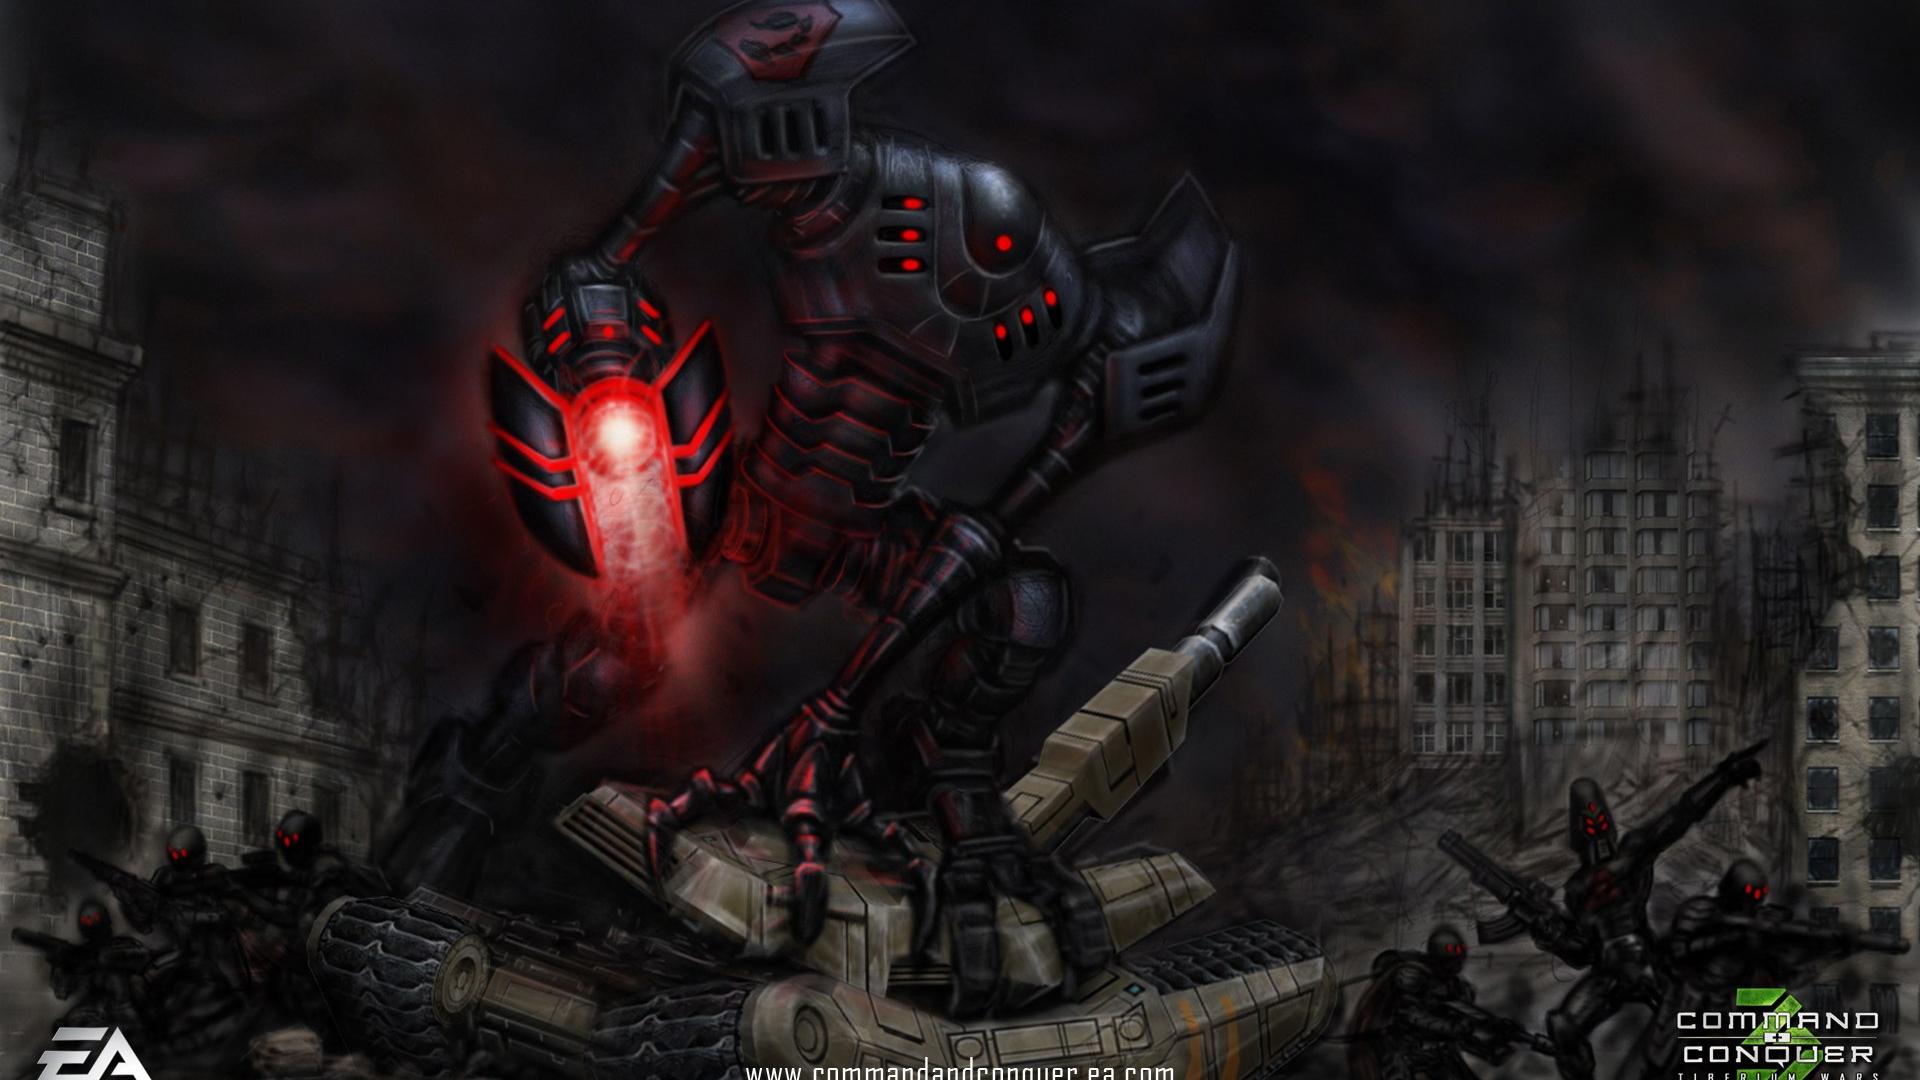 Robot city tank command and conquer gdi laser tiberium wars nod